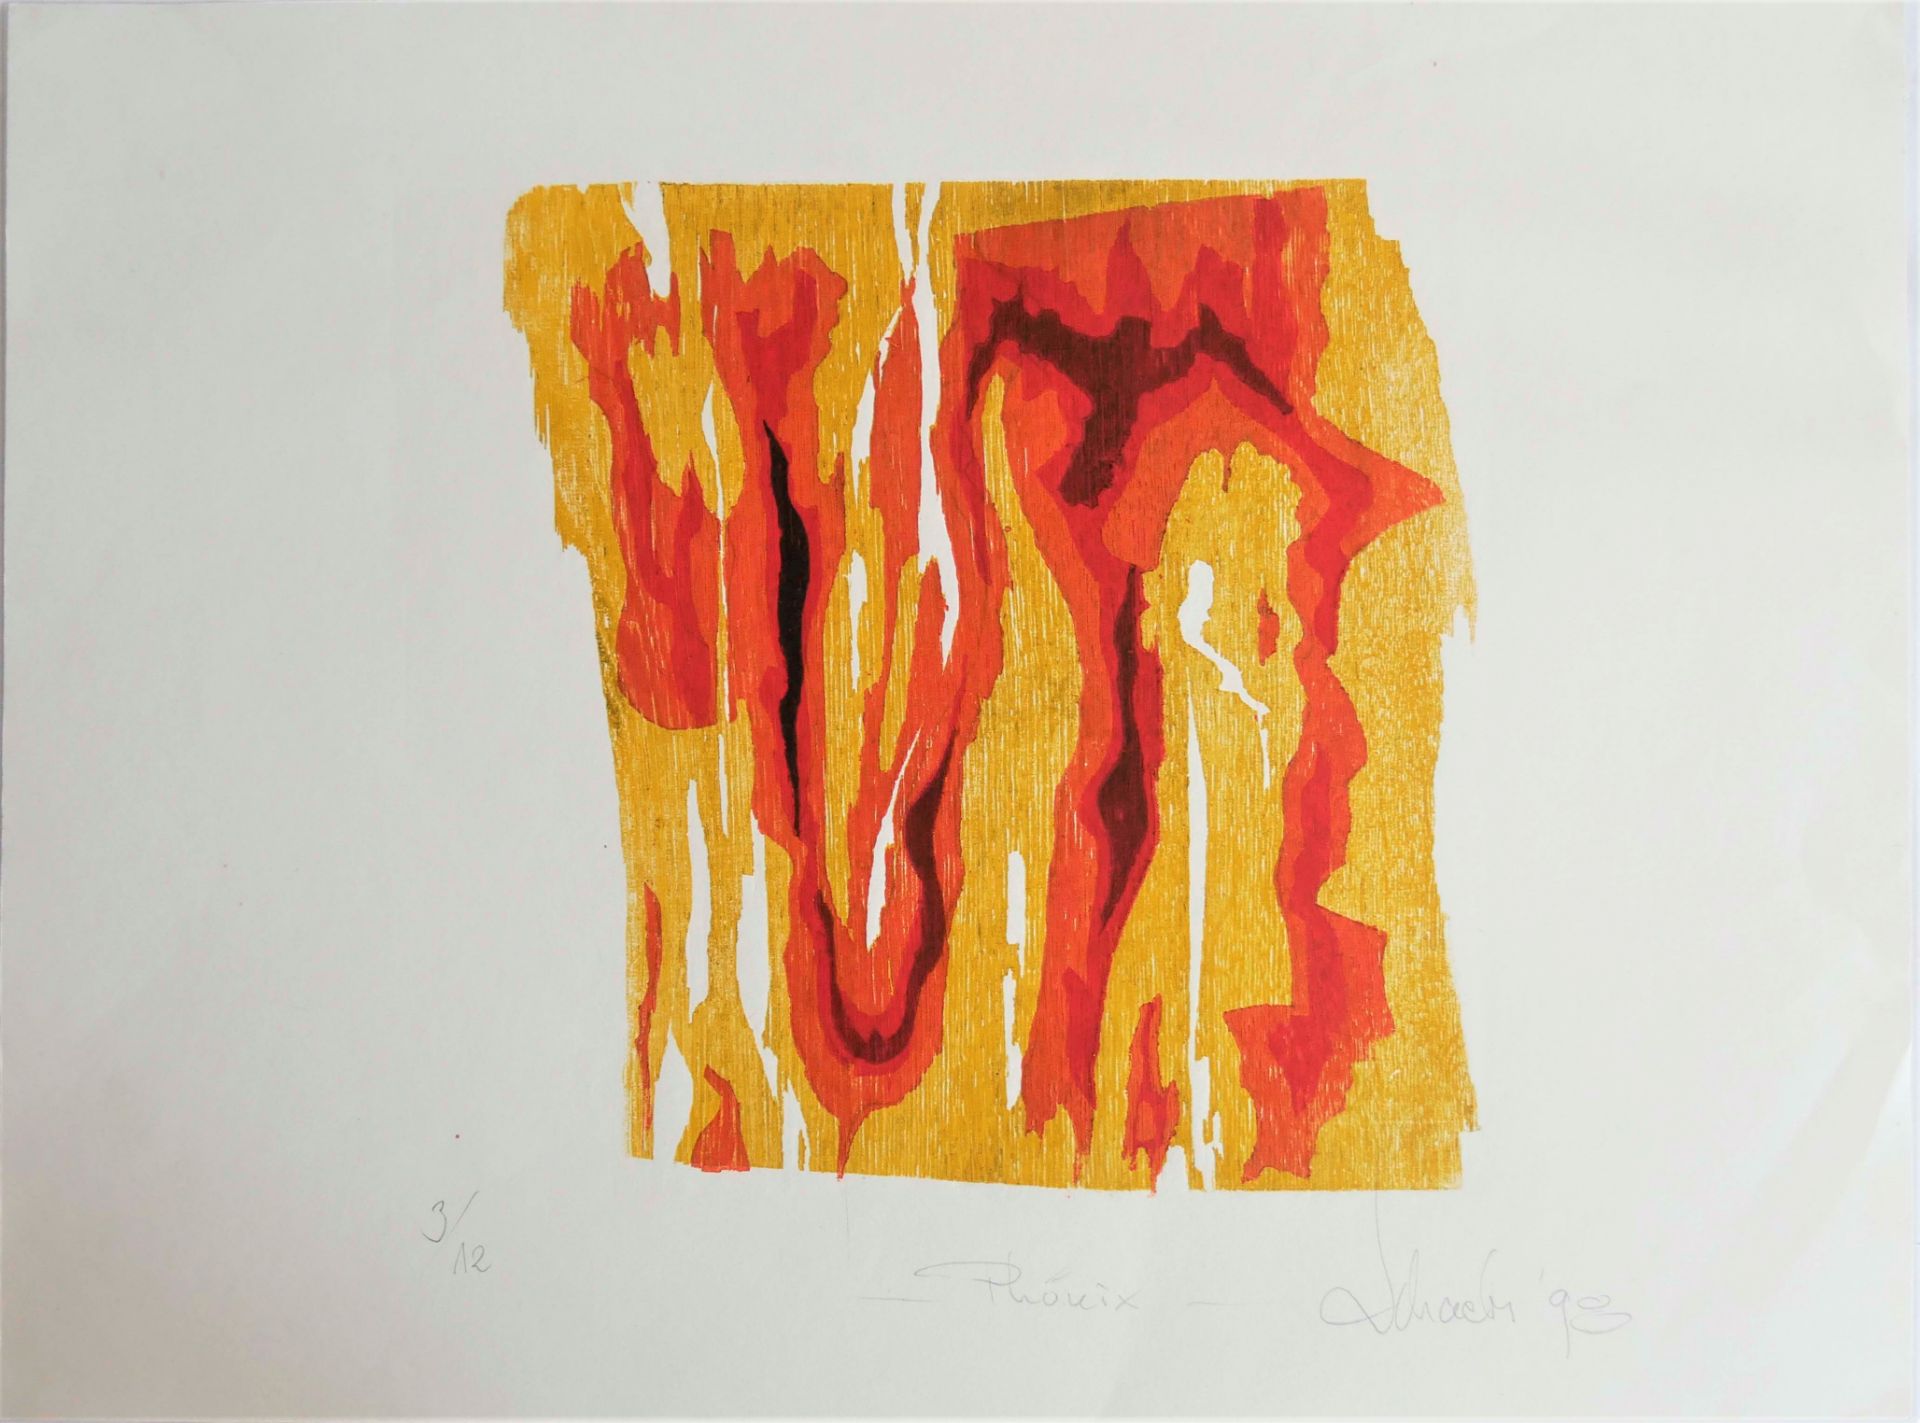 Farblithographie, "Phönix" 3/12, rechts unten Signatur Schach 98. Blattgröße ca. 49 x 68 cm